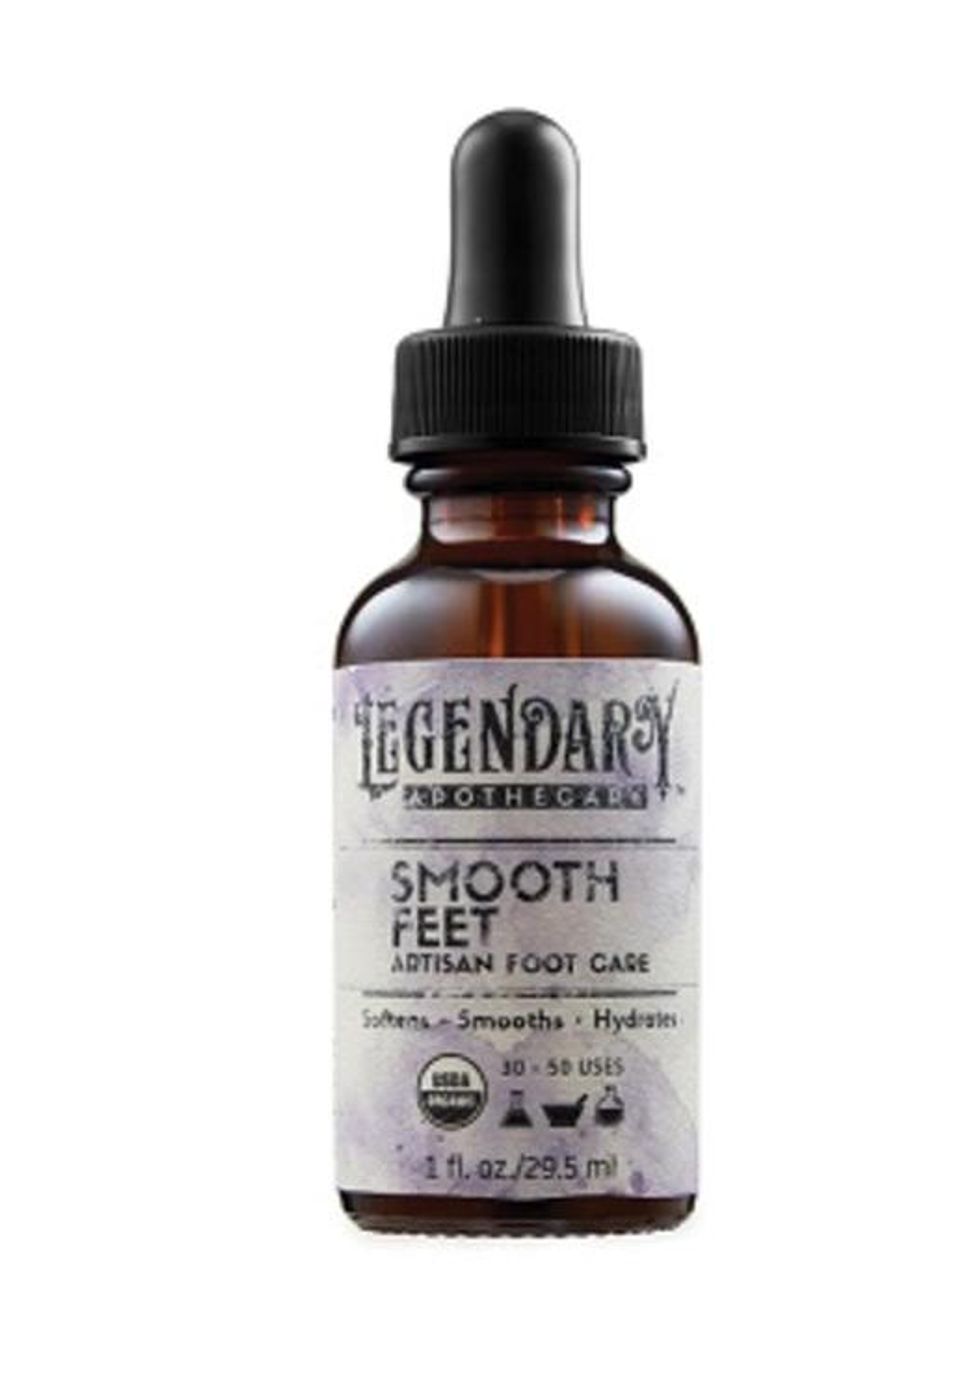 Legendary Apothecary\u2019s secret recipe Smooth Feet is sweet! ($35, LegendaryApothecary.com)